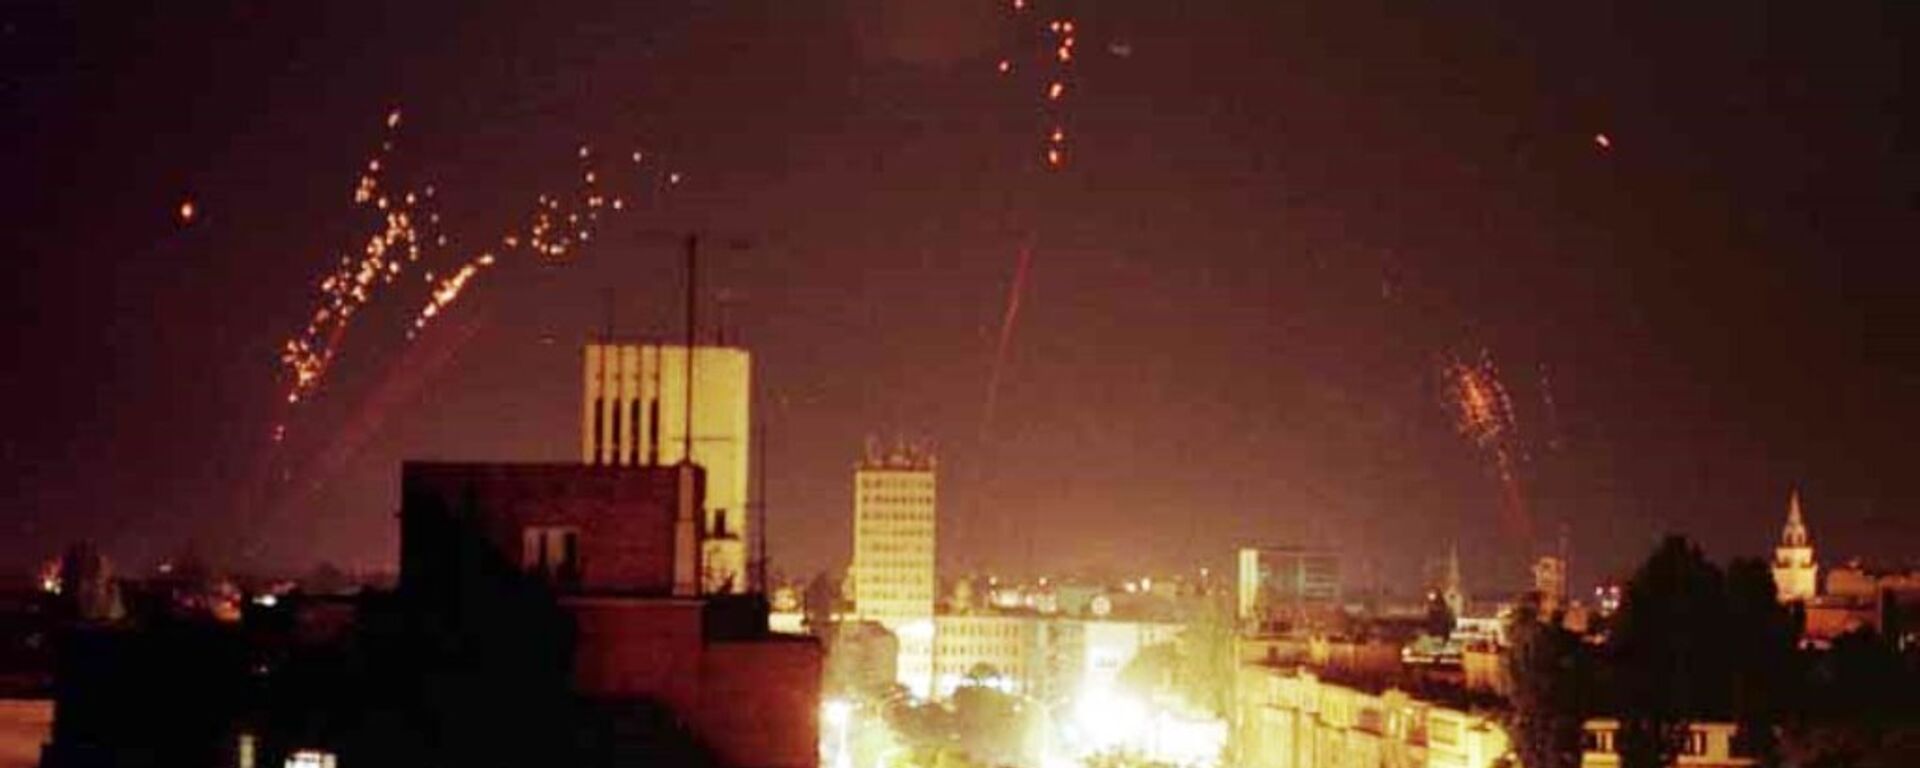 Nato bombardovanje SR Jugoslavija.Protiv vazdušna odbrana pokušava da obori NATO bombardere. - Sputnik Srbija, 1920, 20.01.2021